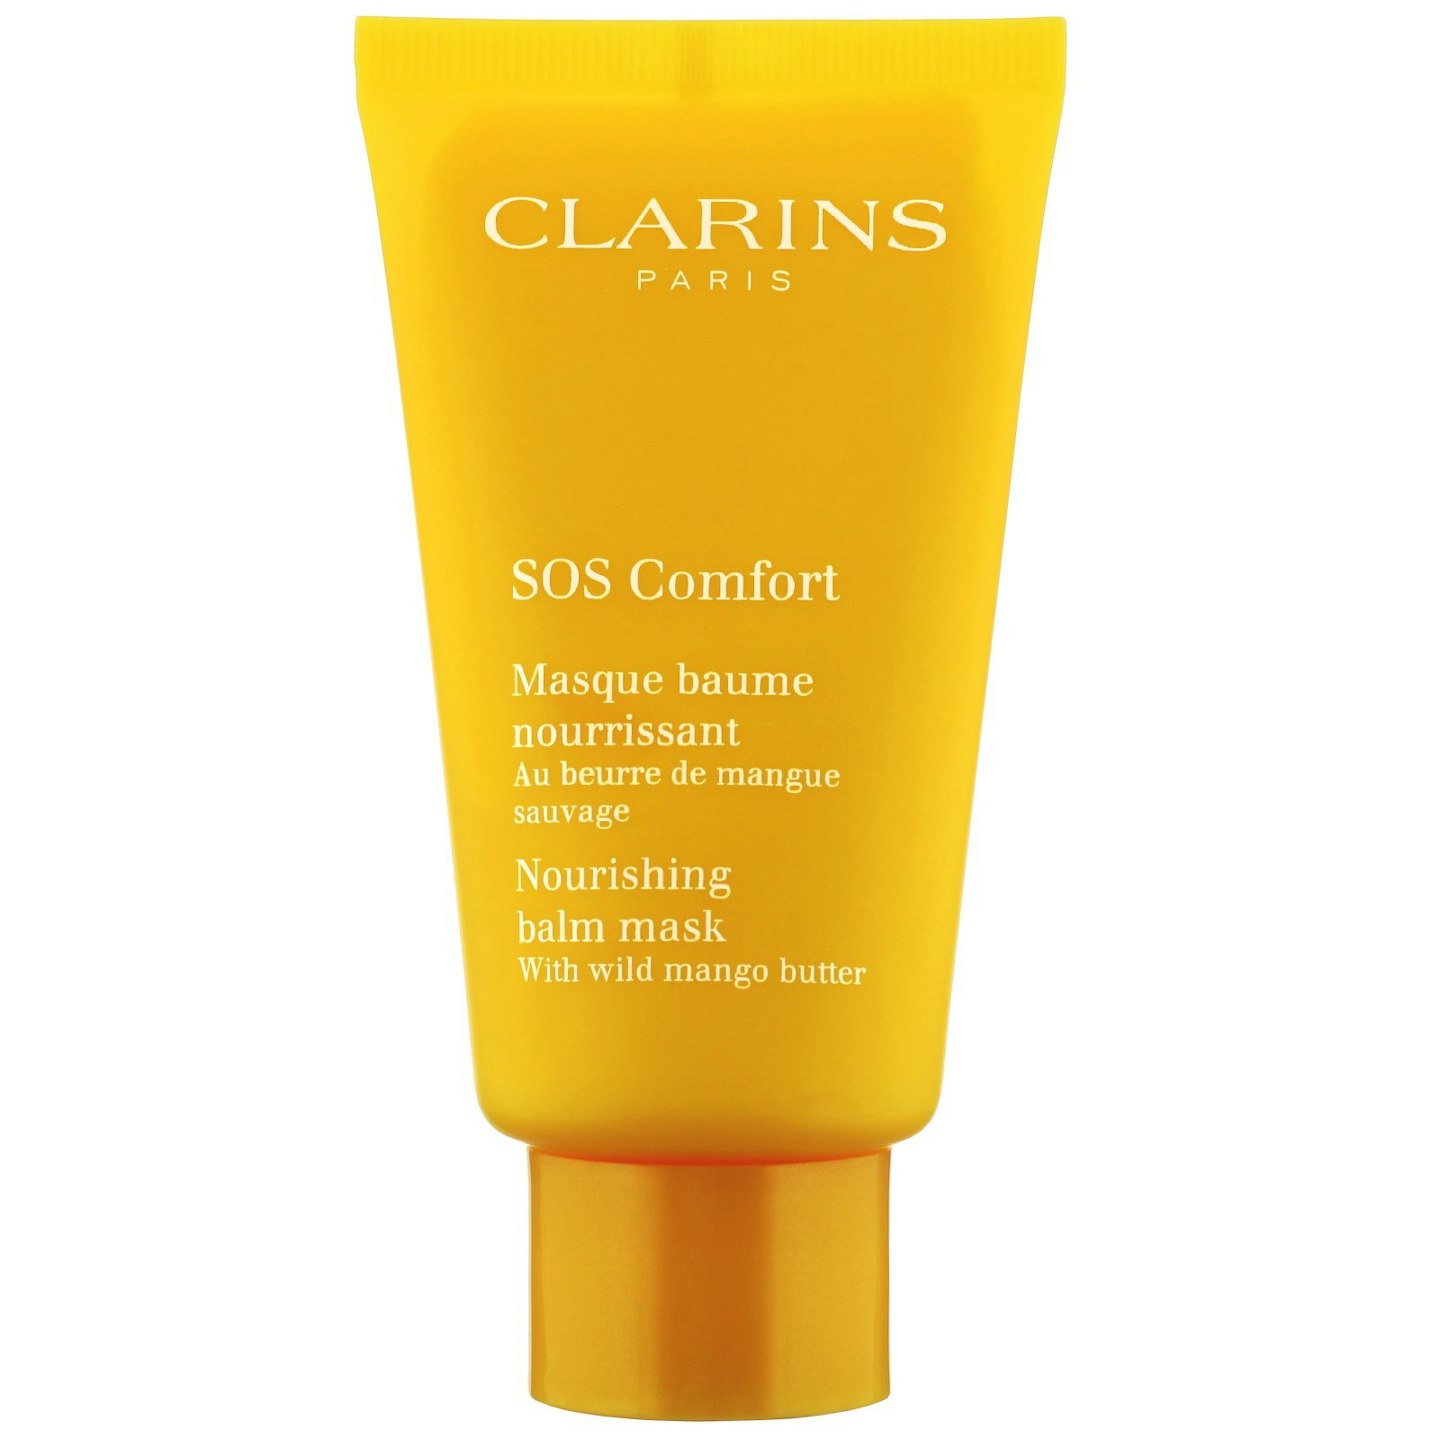 Clarins SOS Comfort Mask, £30